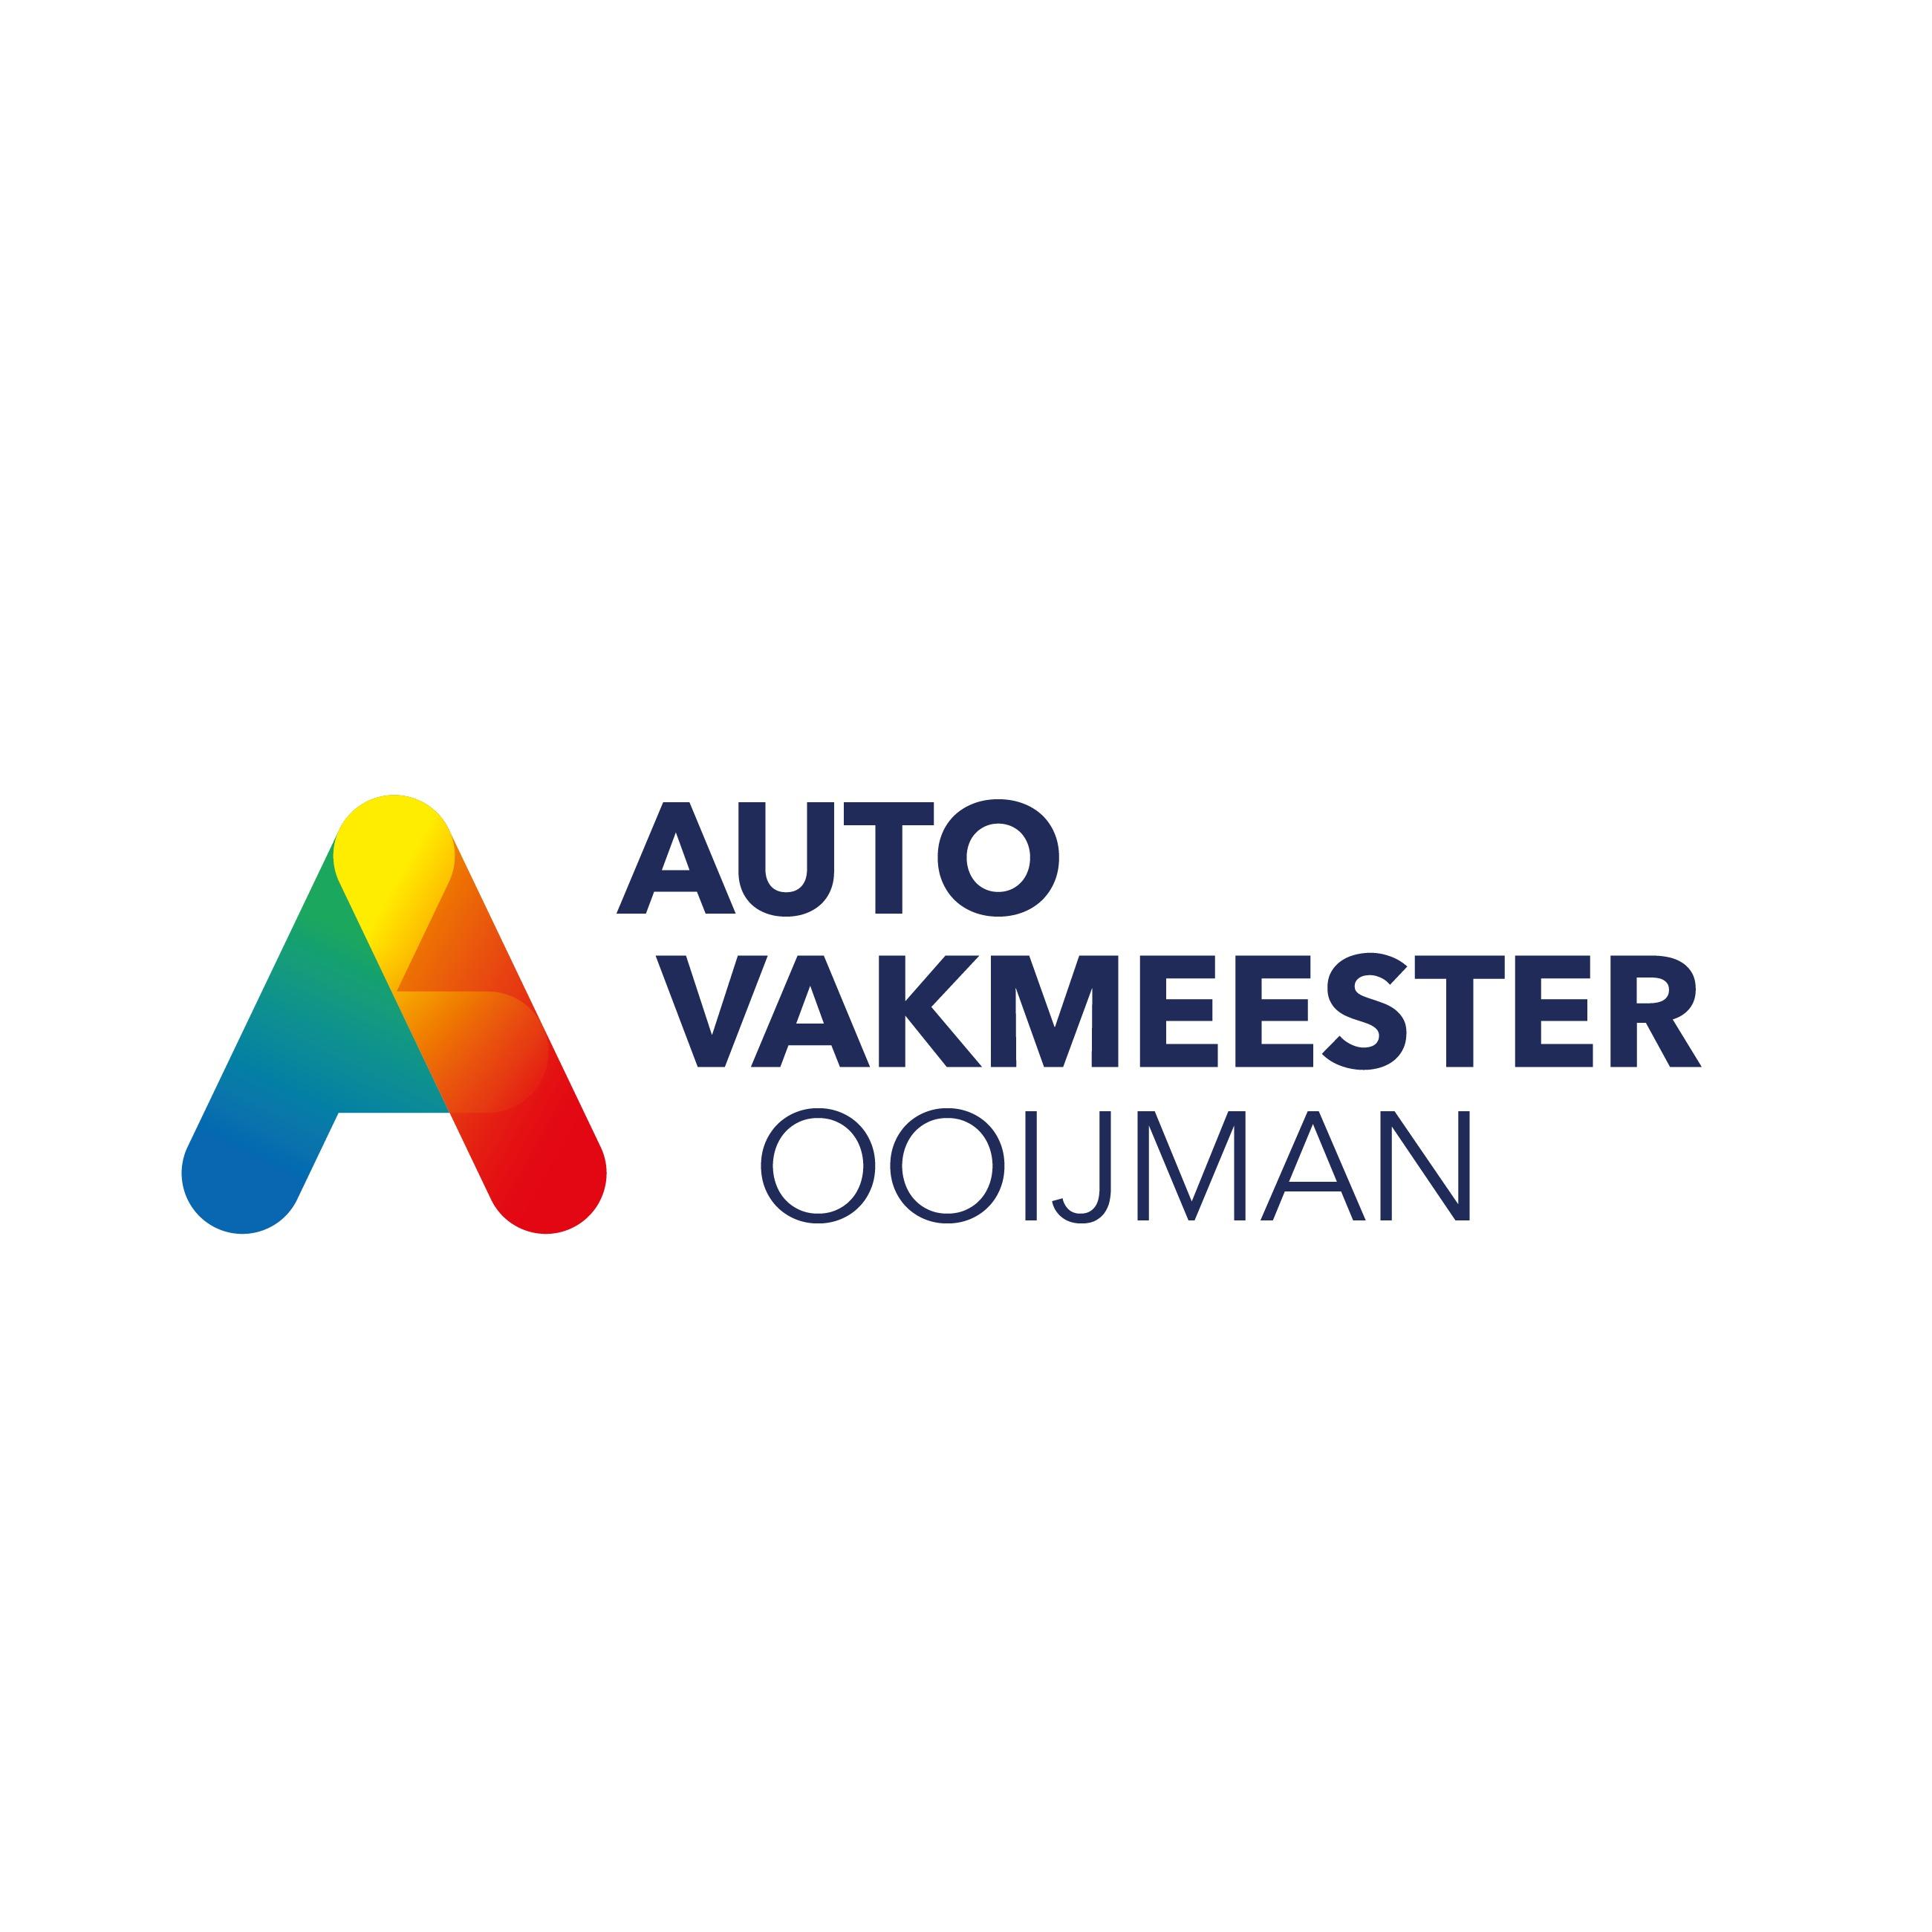 Autovakmeester Ooijman Logo